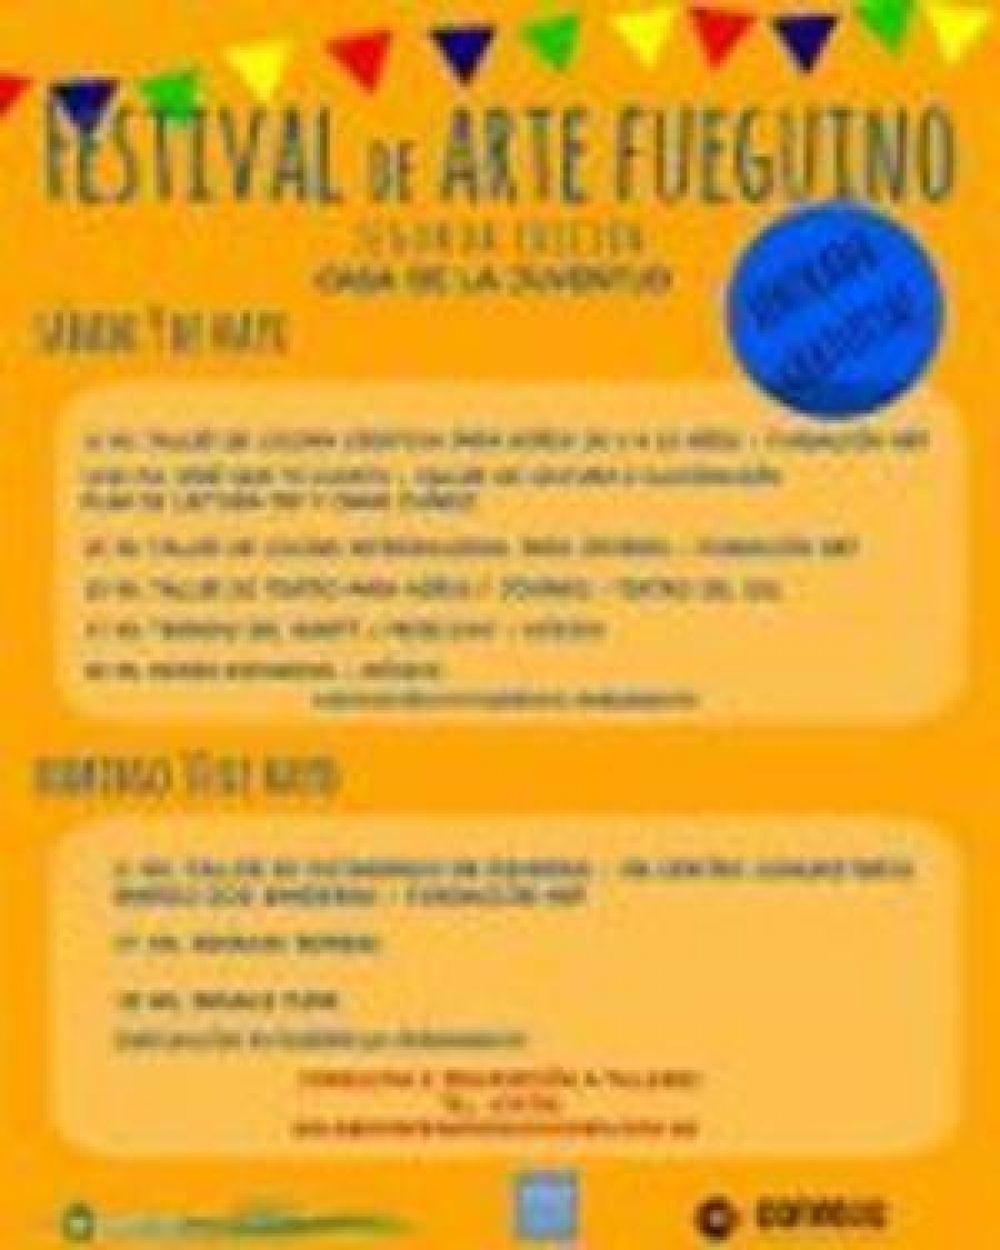 El fin de semana se realizar la 2da edicin del Festival de Arte Fueguino